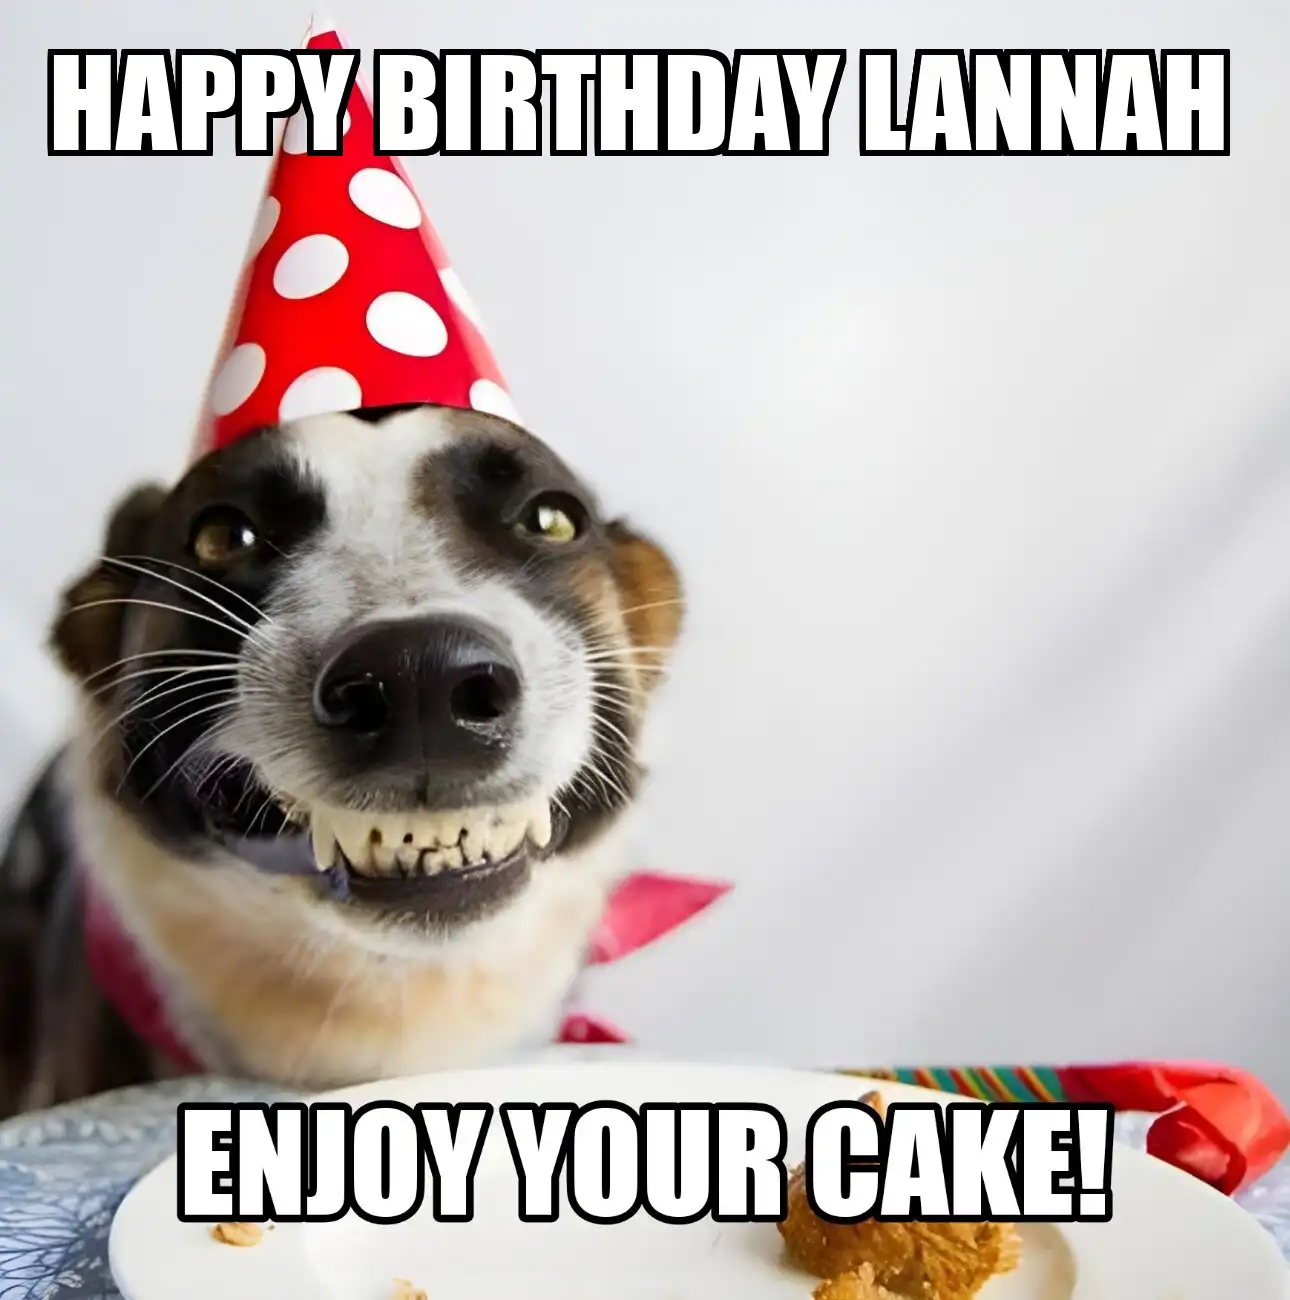 Happy Birthday Lannah Enjoy Your Cake Dog Meme